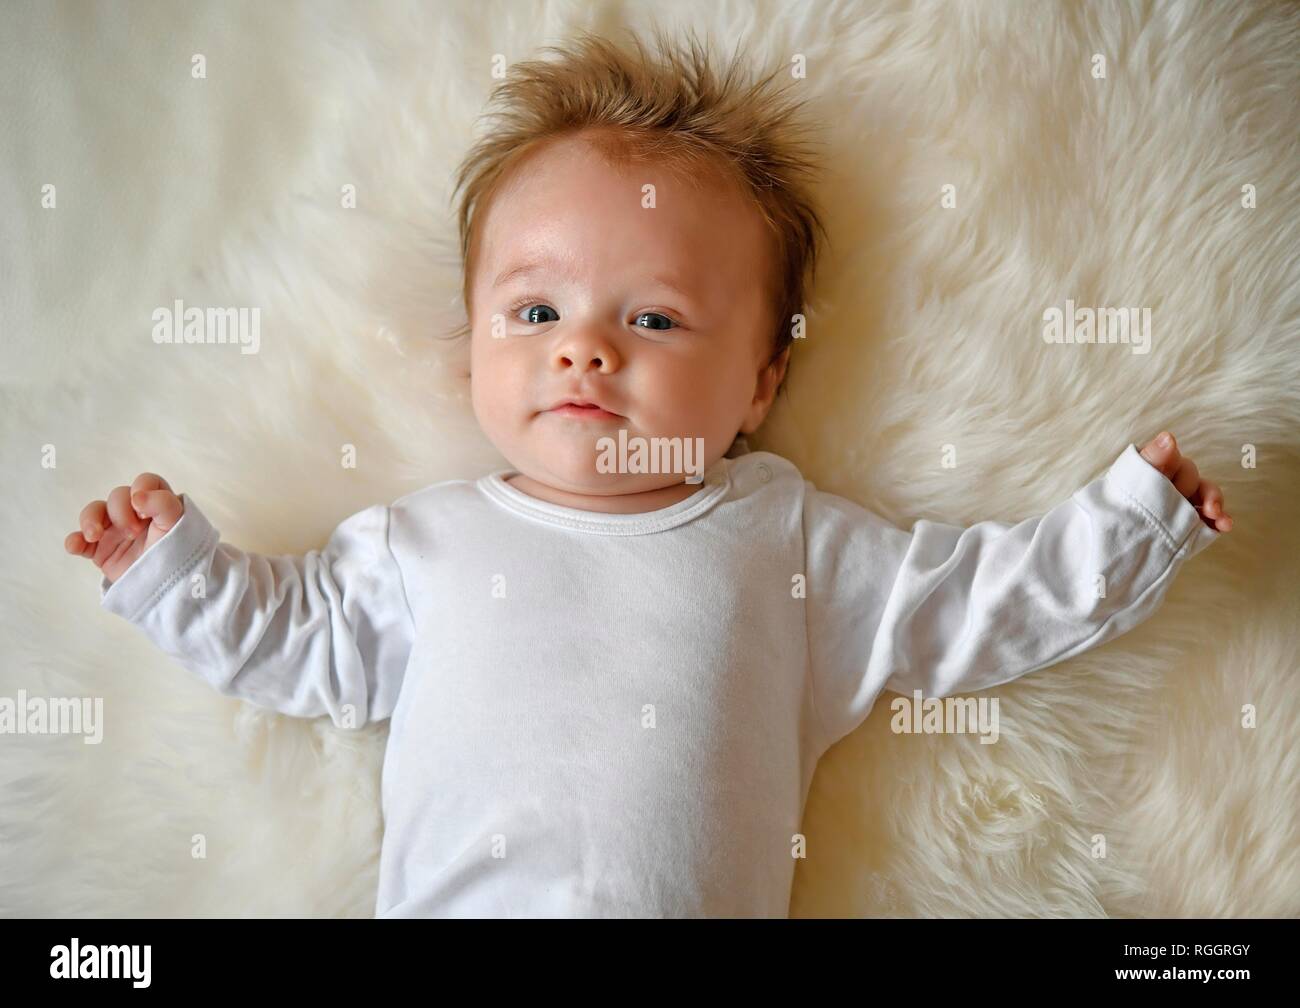 Infant, three months, lying on fur, portrait, Baden-Württemberg, Germany Stock Photo